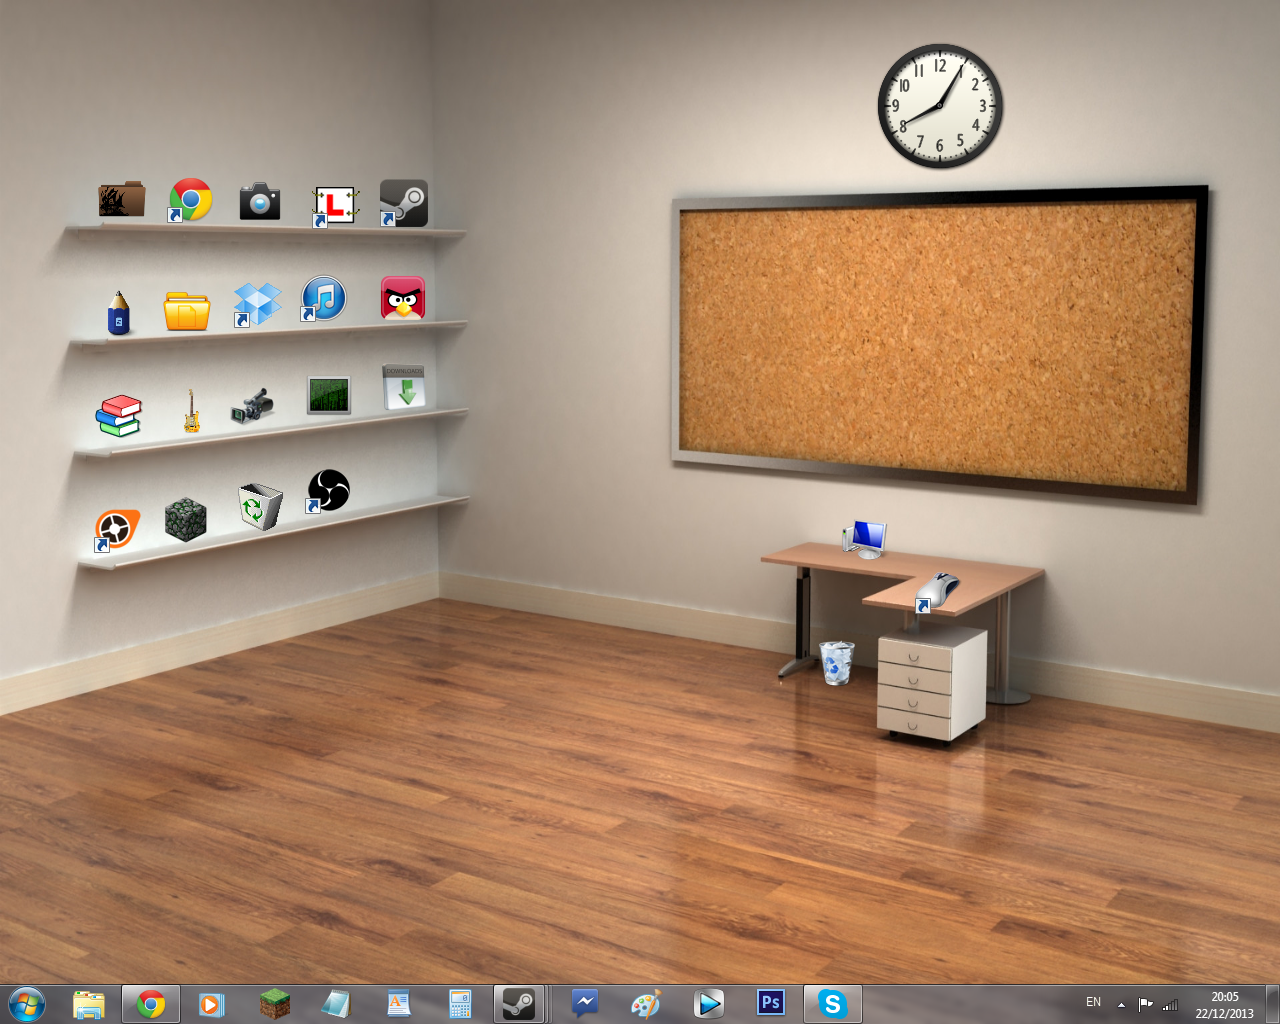 My desktop after seeing that sweet game shelf background. gaming